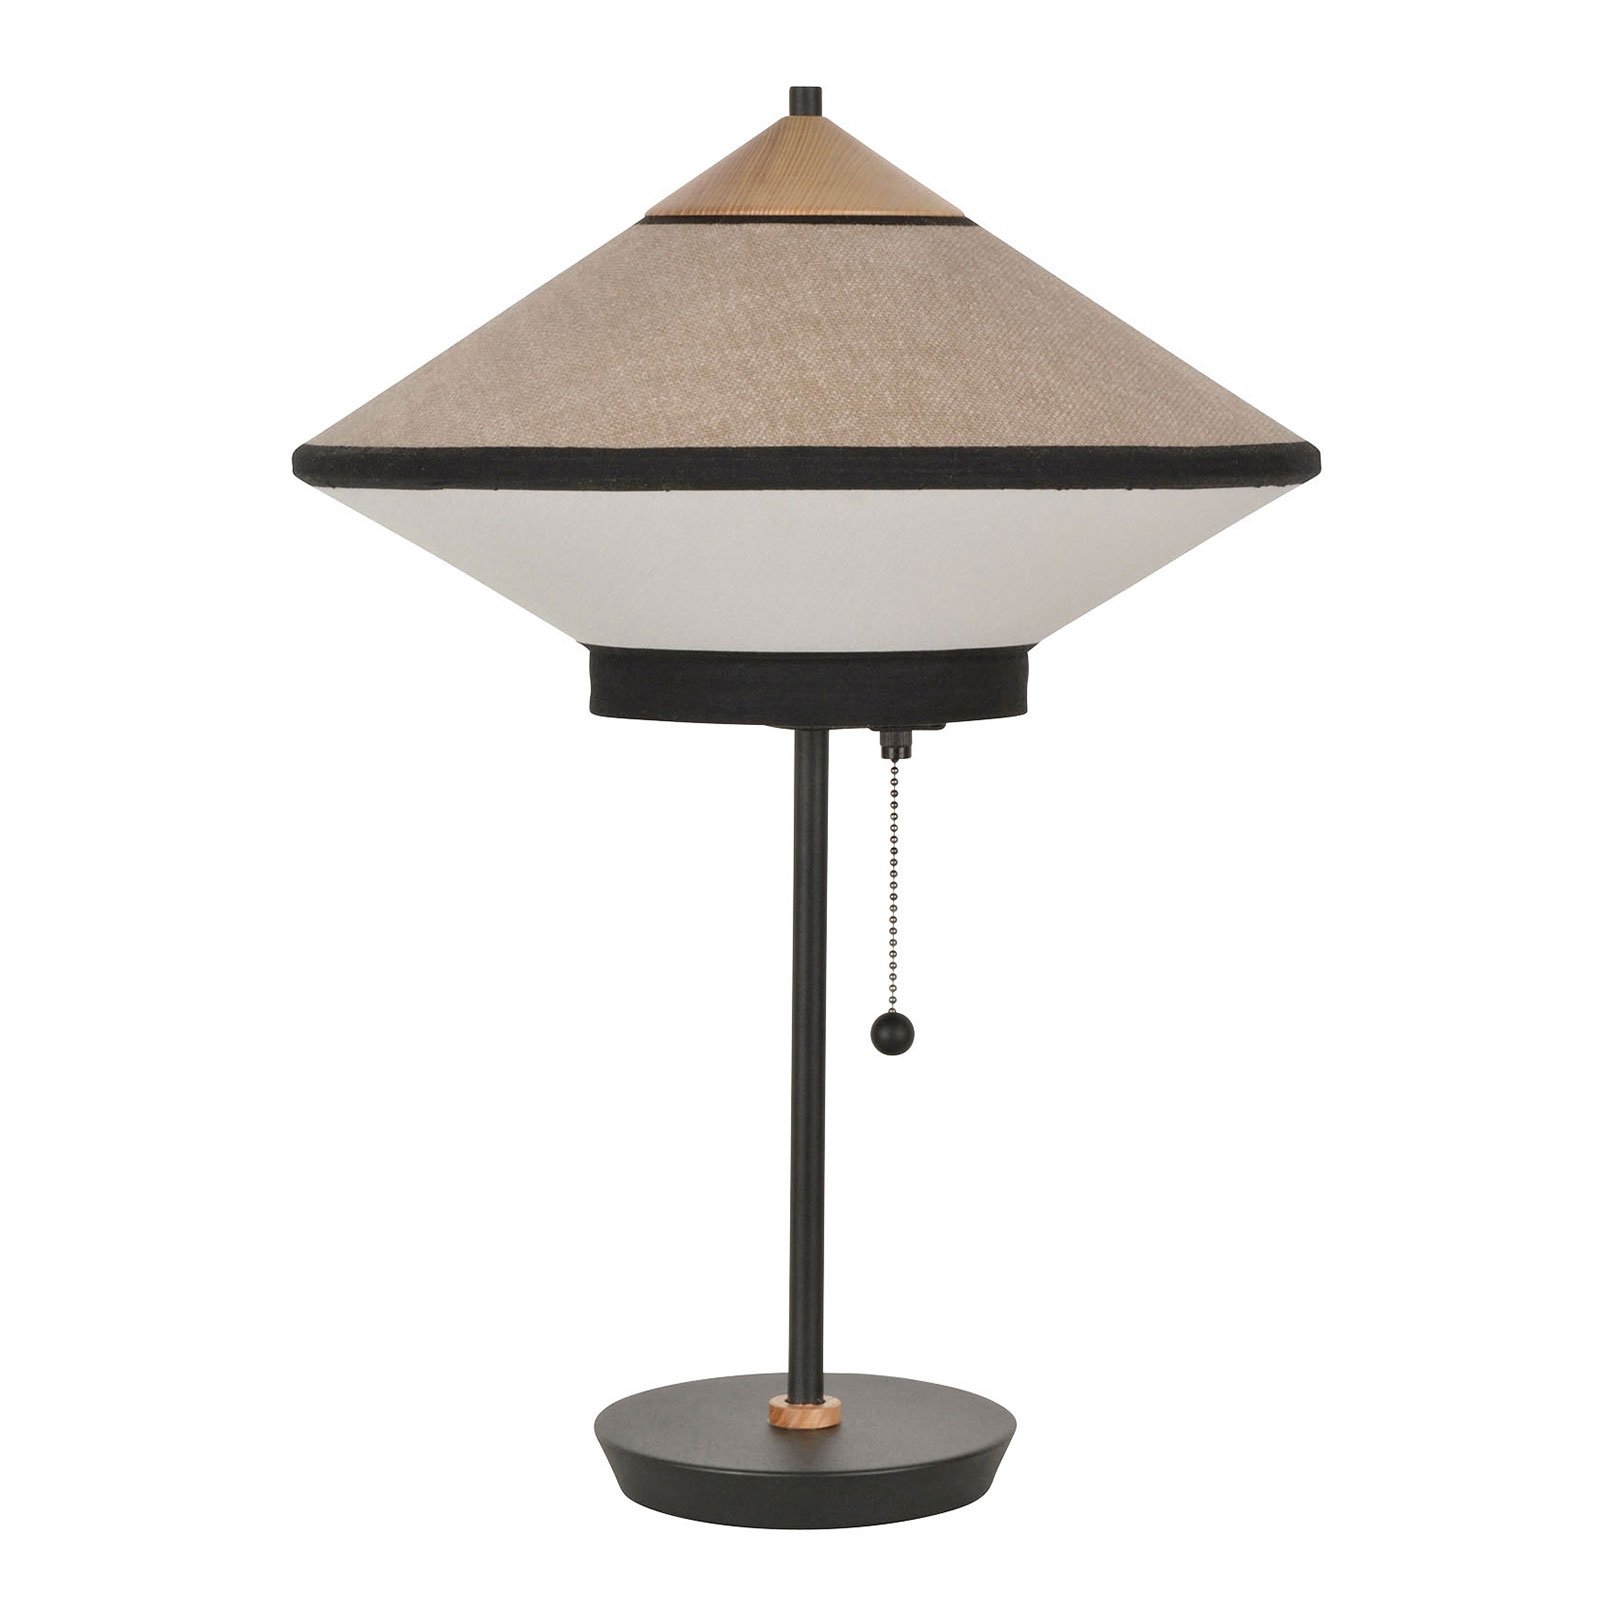 Forestier Cymbal S lampa stołowa, naturalna